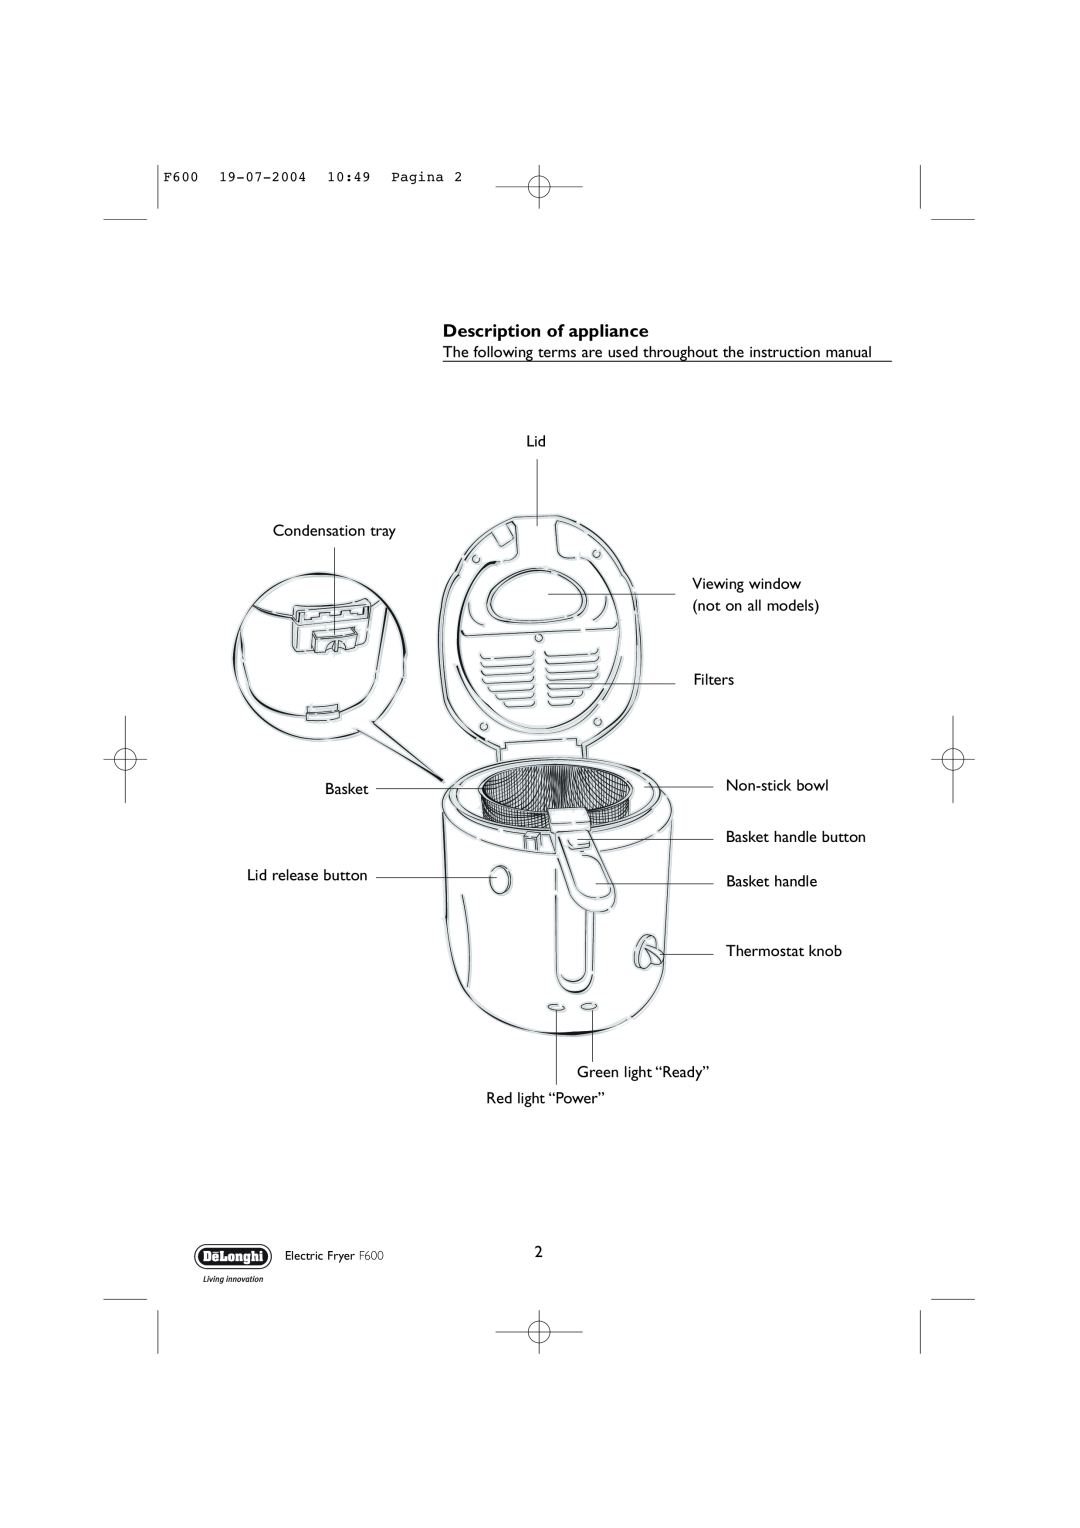 DeLonghi F600 Description of appliance, Lid Condensation tray, Filters, Non-stickbowl, Basket handle, Thermostat knob 